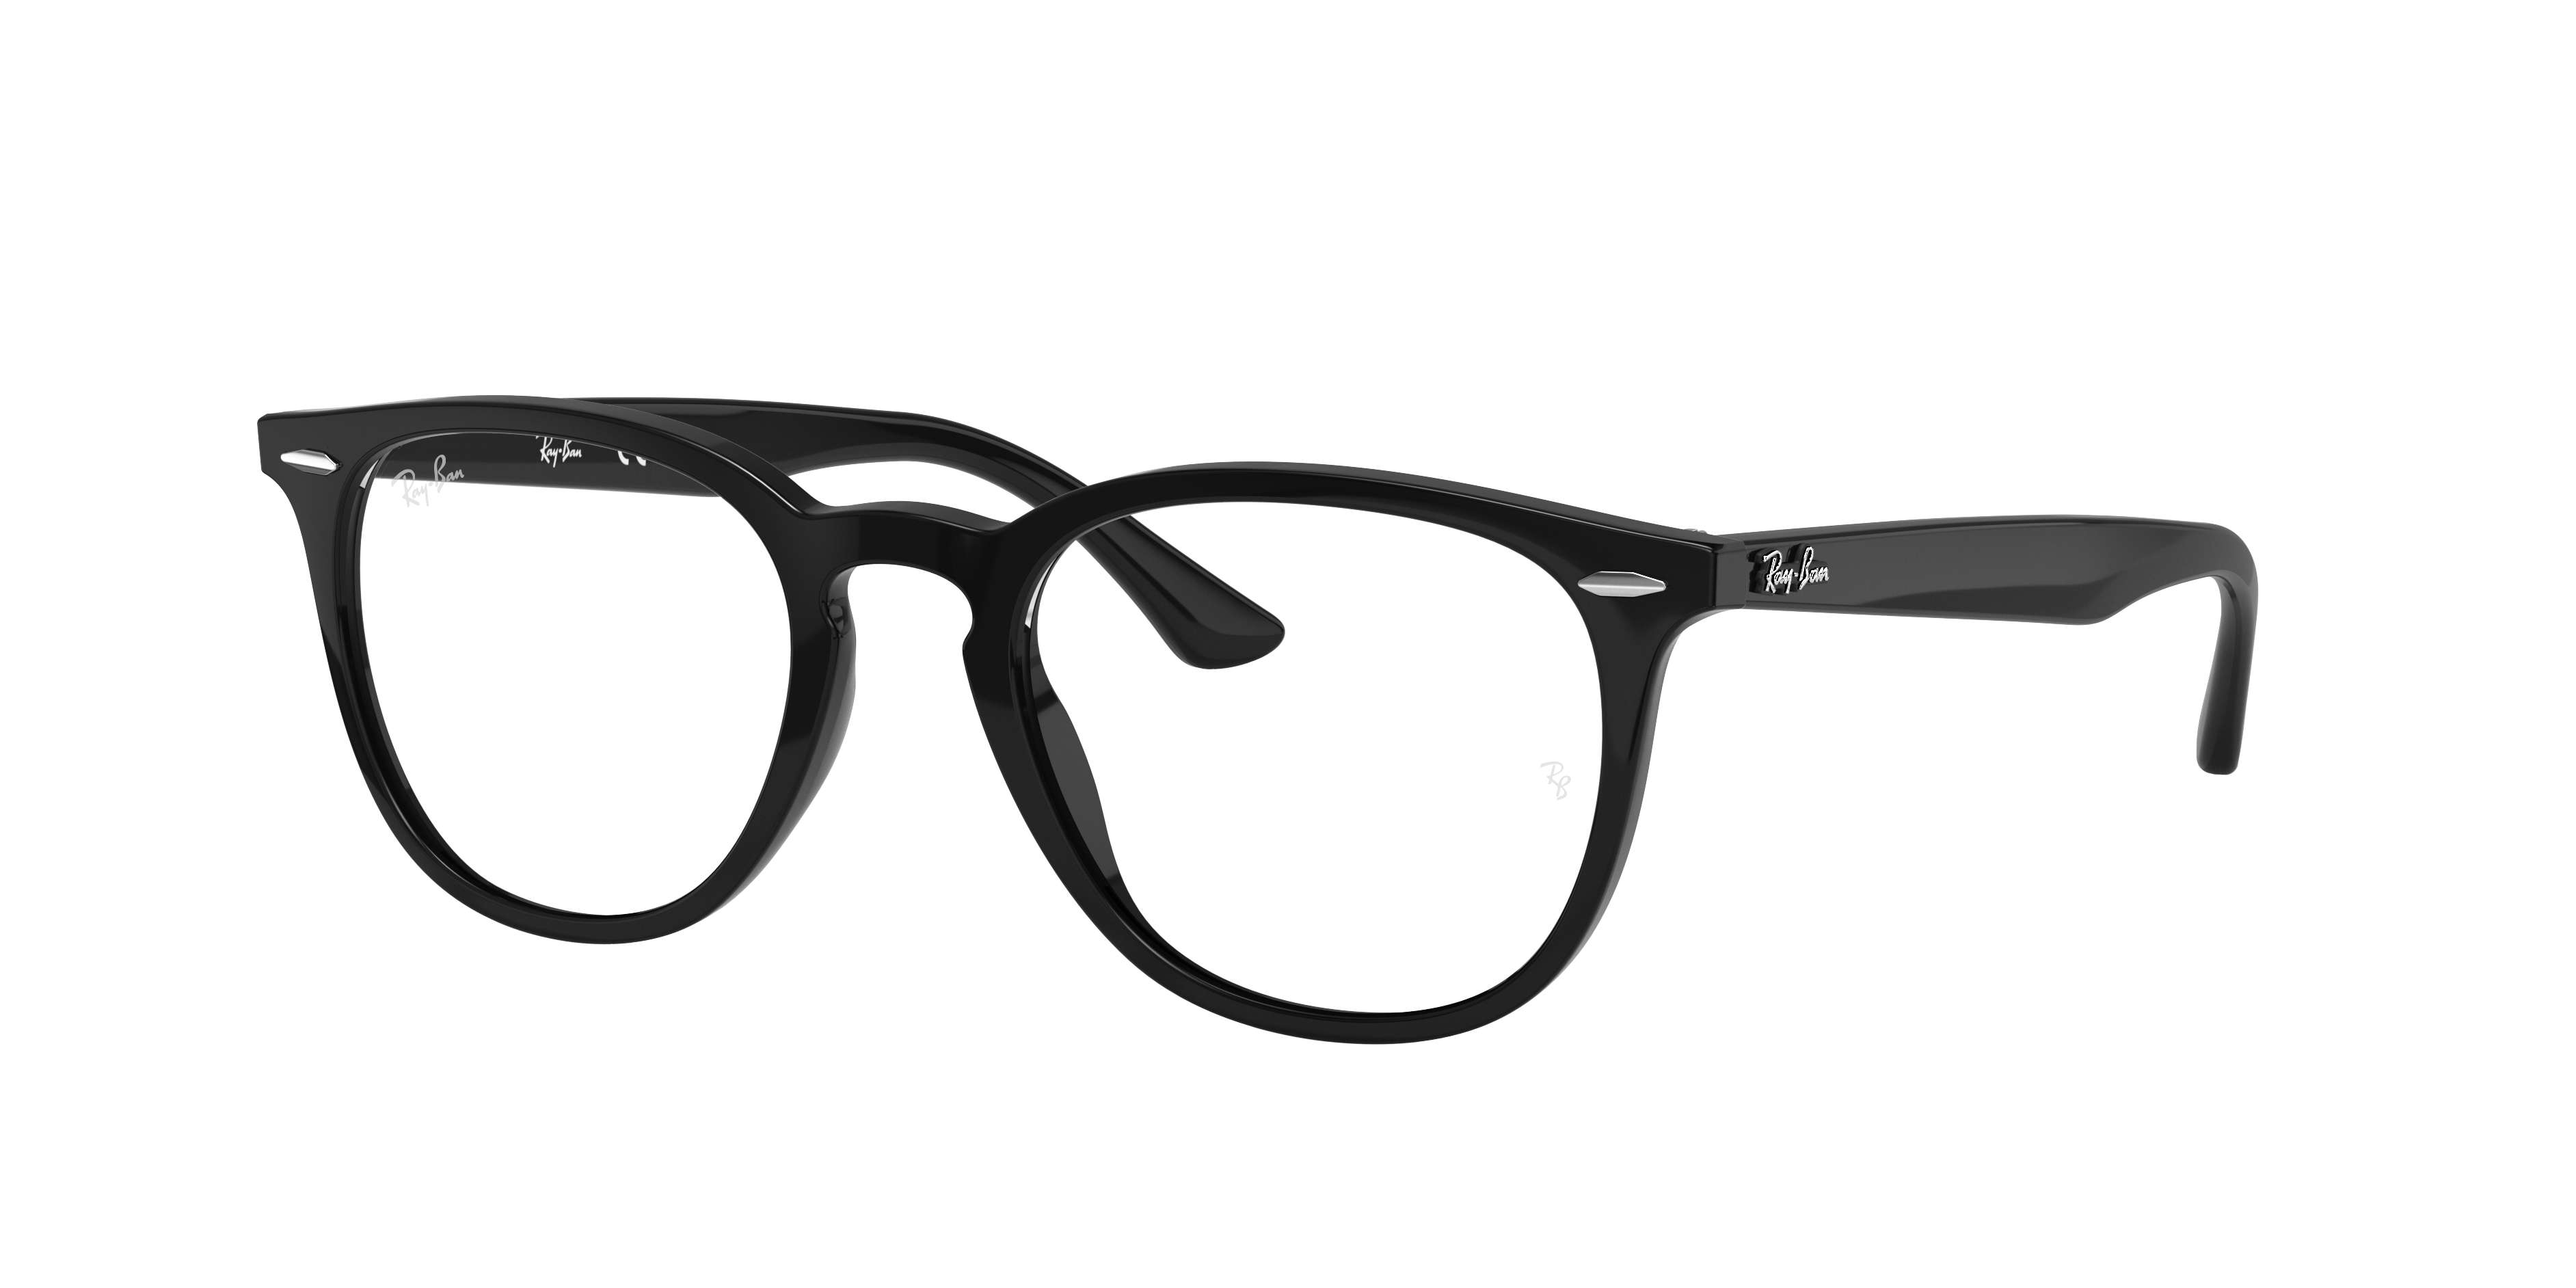 Rb7159 Optics Eyeglasses with Black Frame | Ray-Ban®